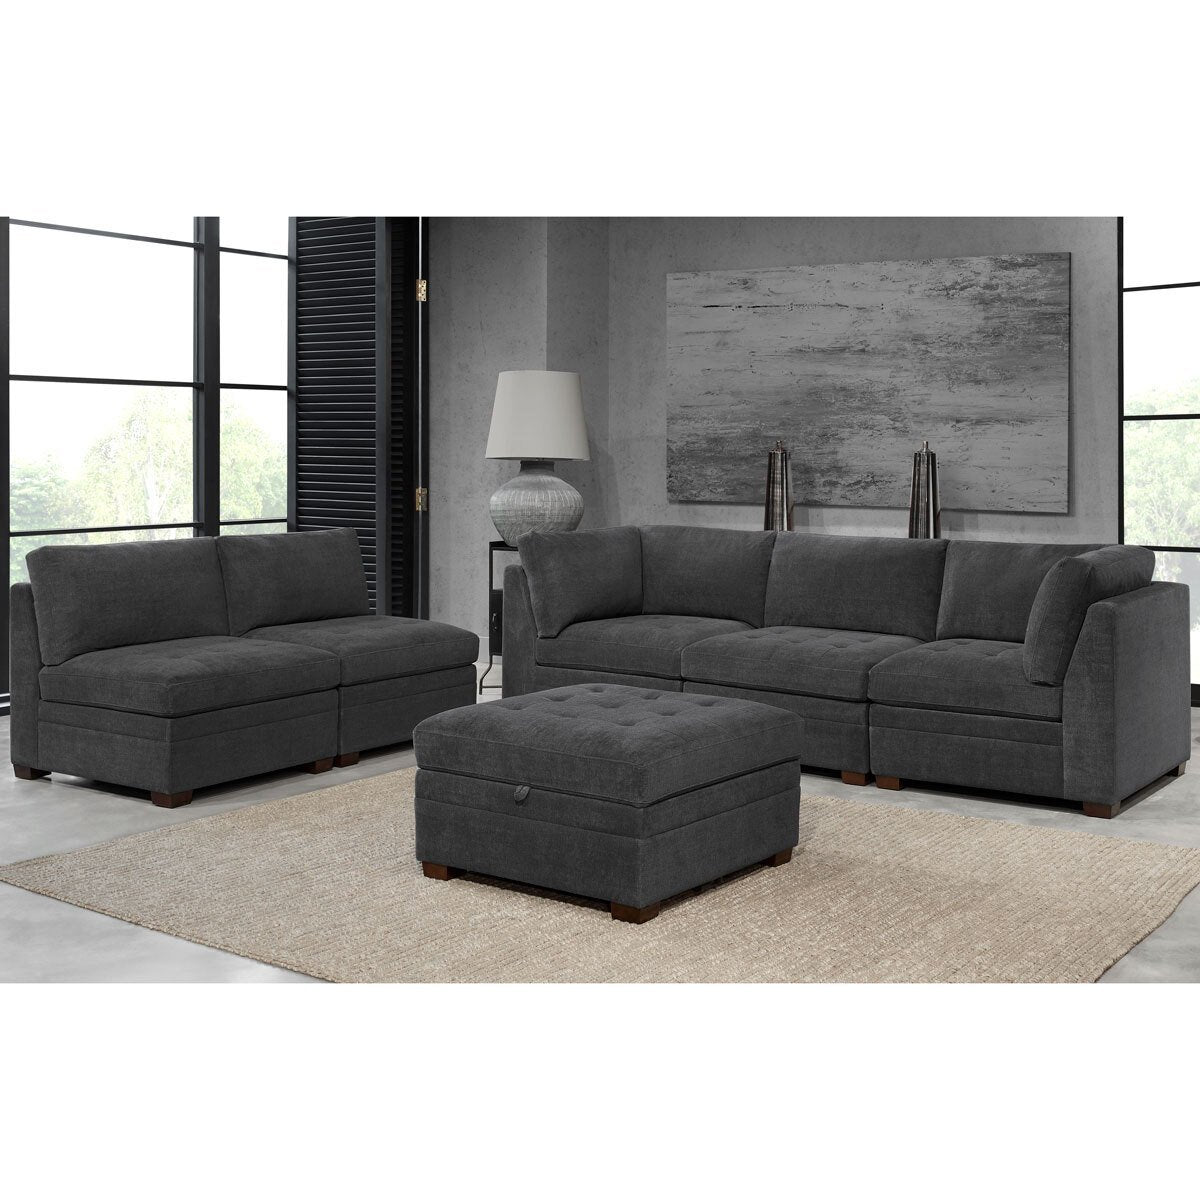 Thomasville Tisdale Dark Grey 6 Piece Modular Fabric Sofa - Signature Retail Stores